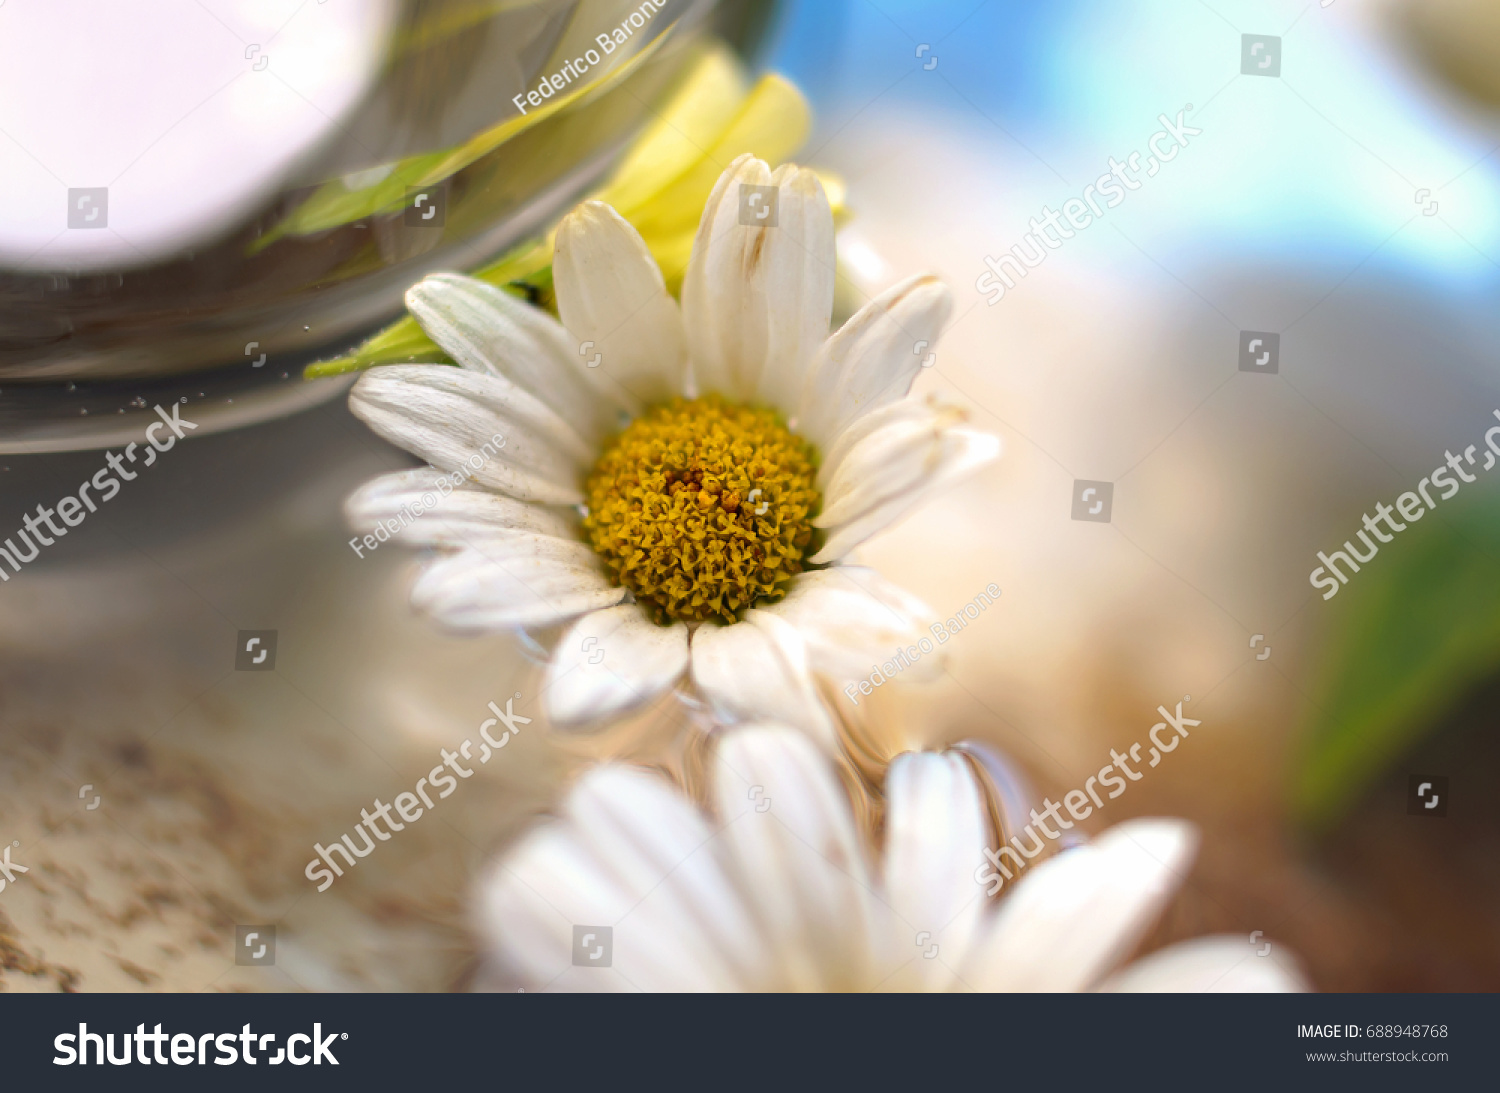 stock-photo-close-up-of-a-daisy-flower-i